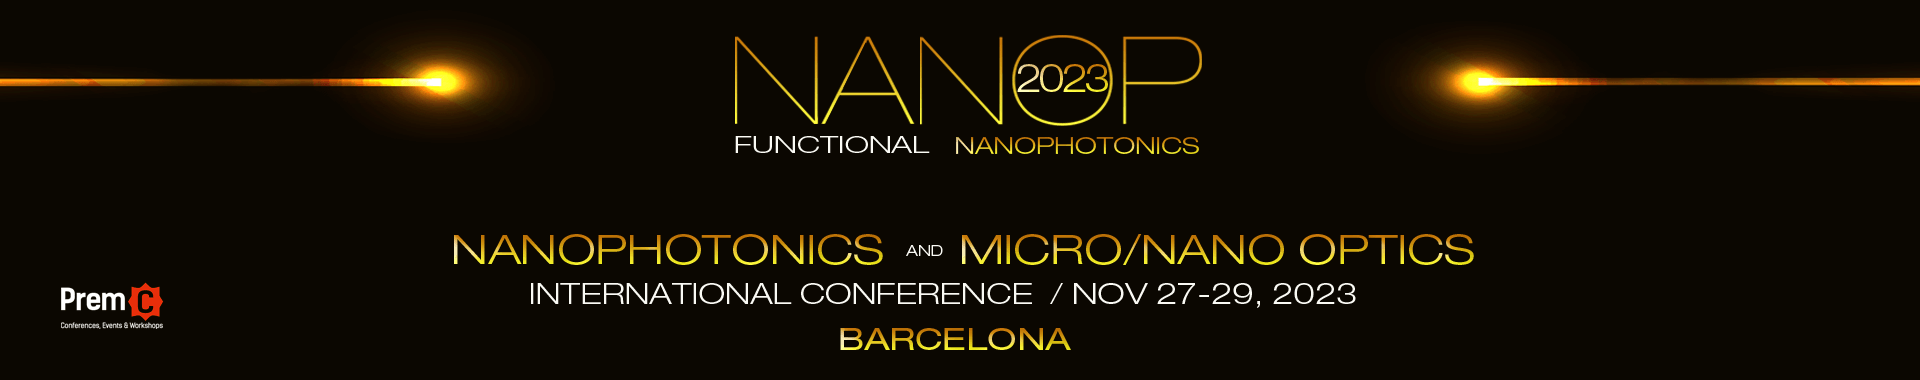 Nanophotonics and Micro/Nano Optics International Conference banner